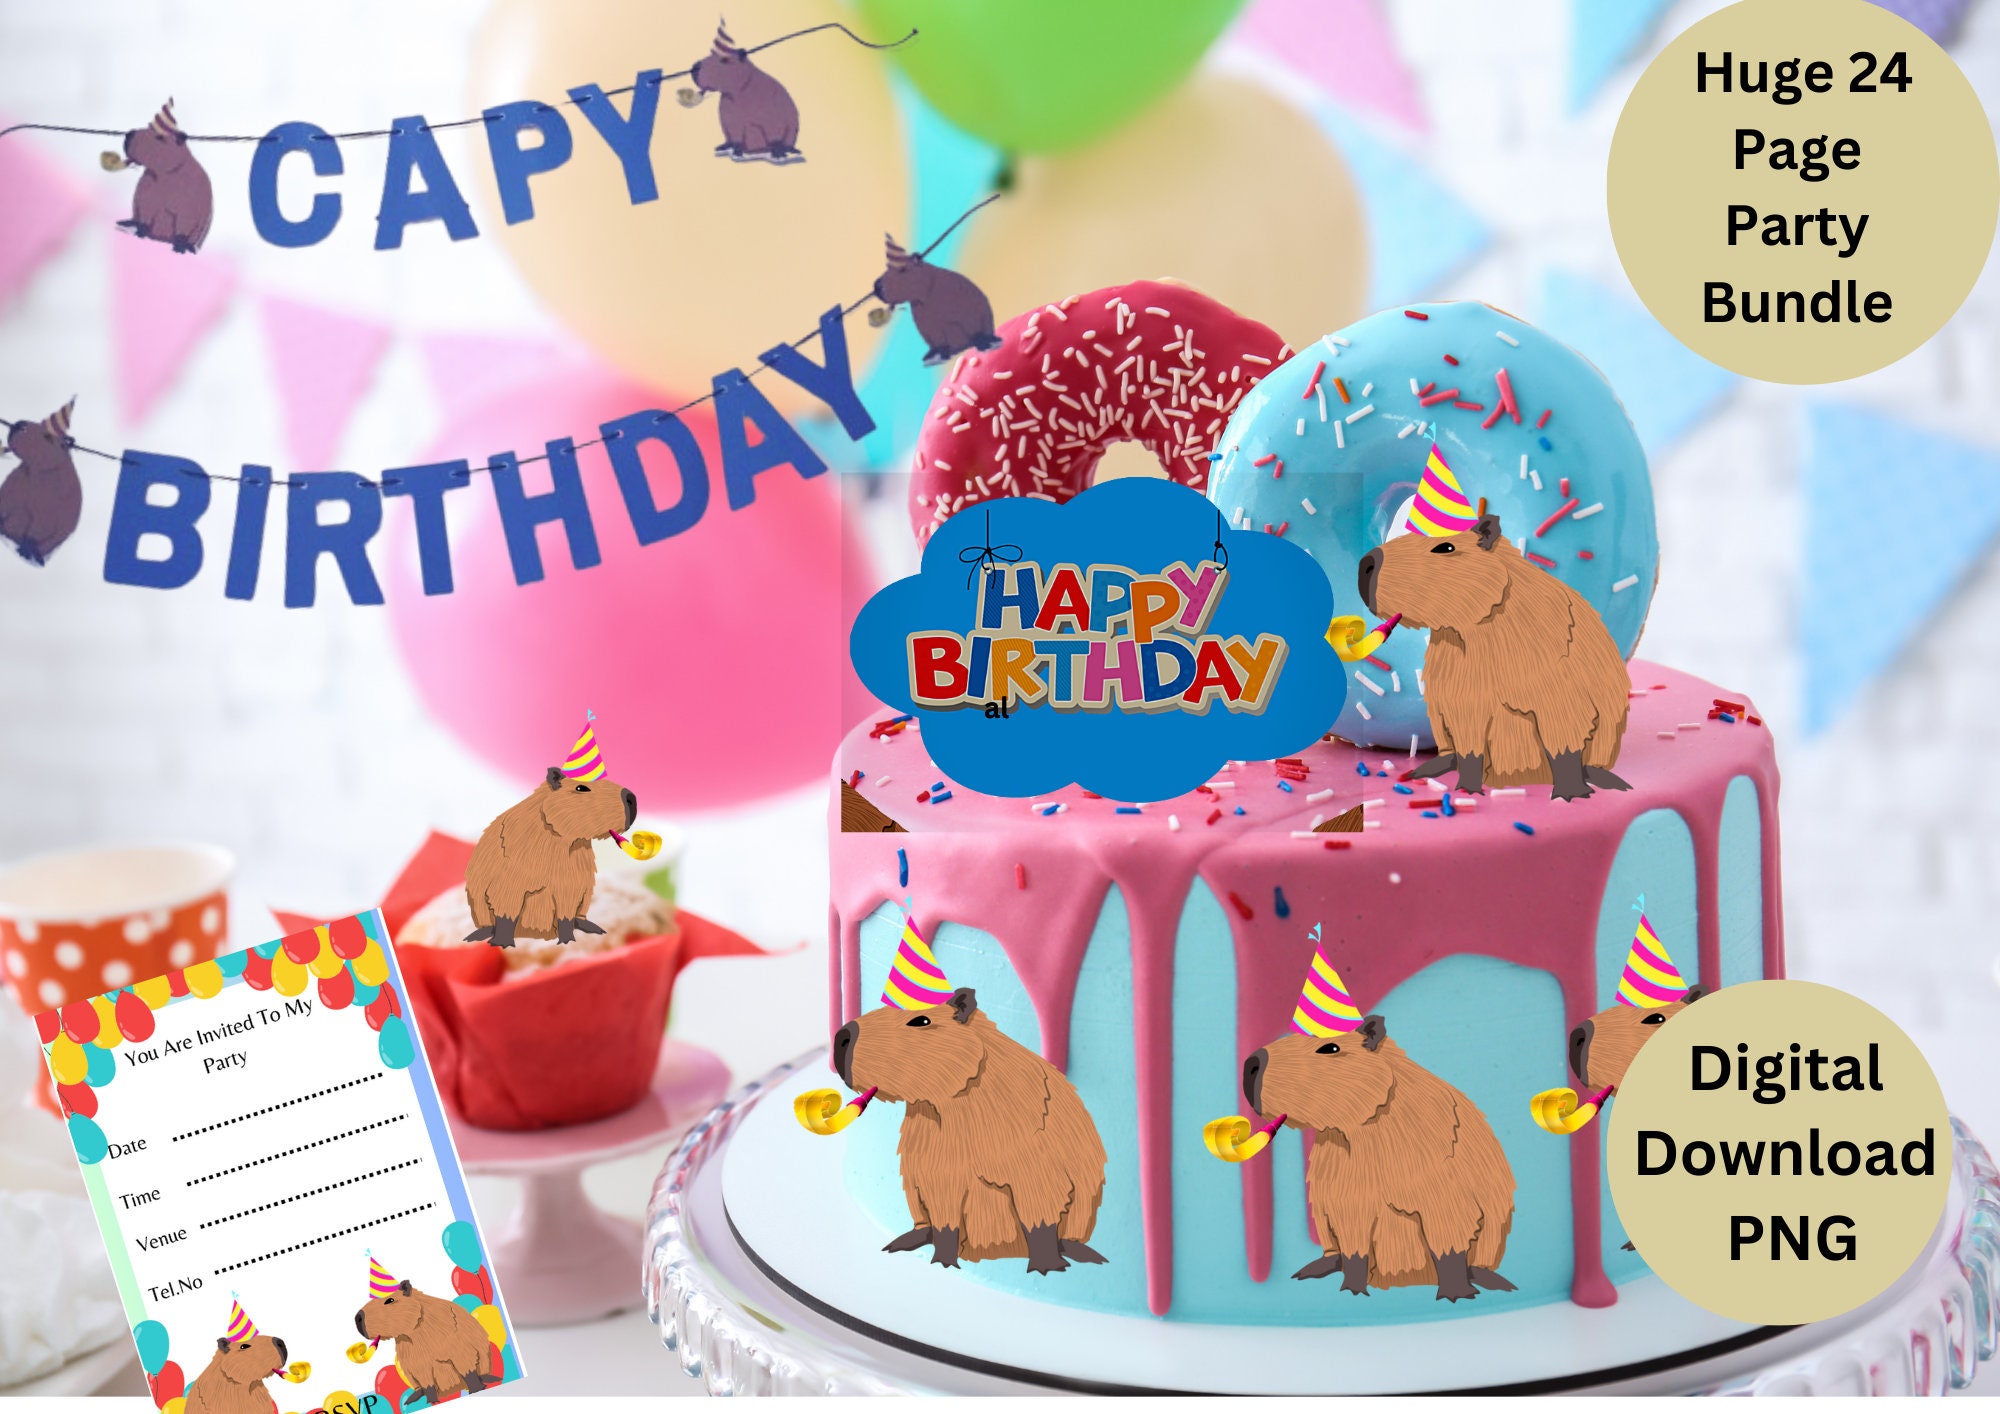 Capy Birthday Digital Download Capybara Party Bundle Personalised